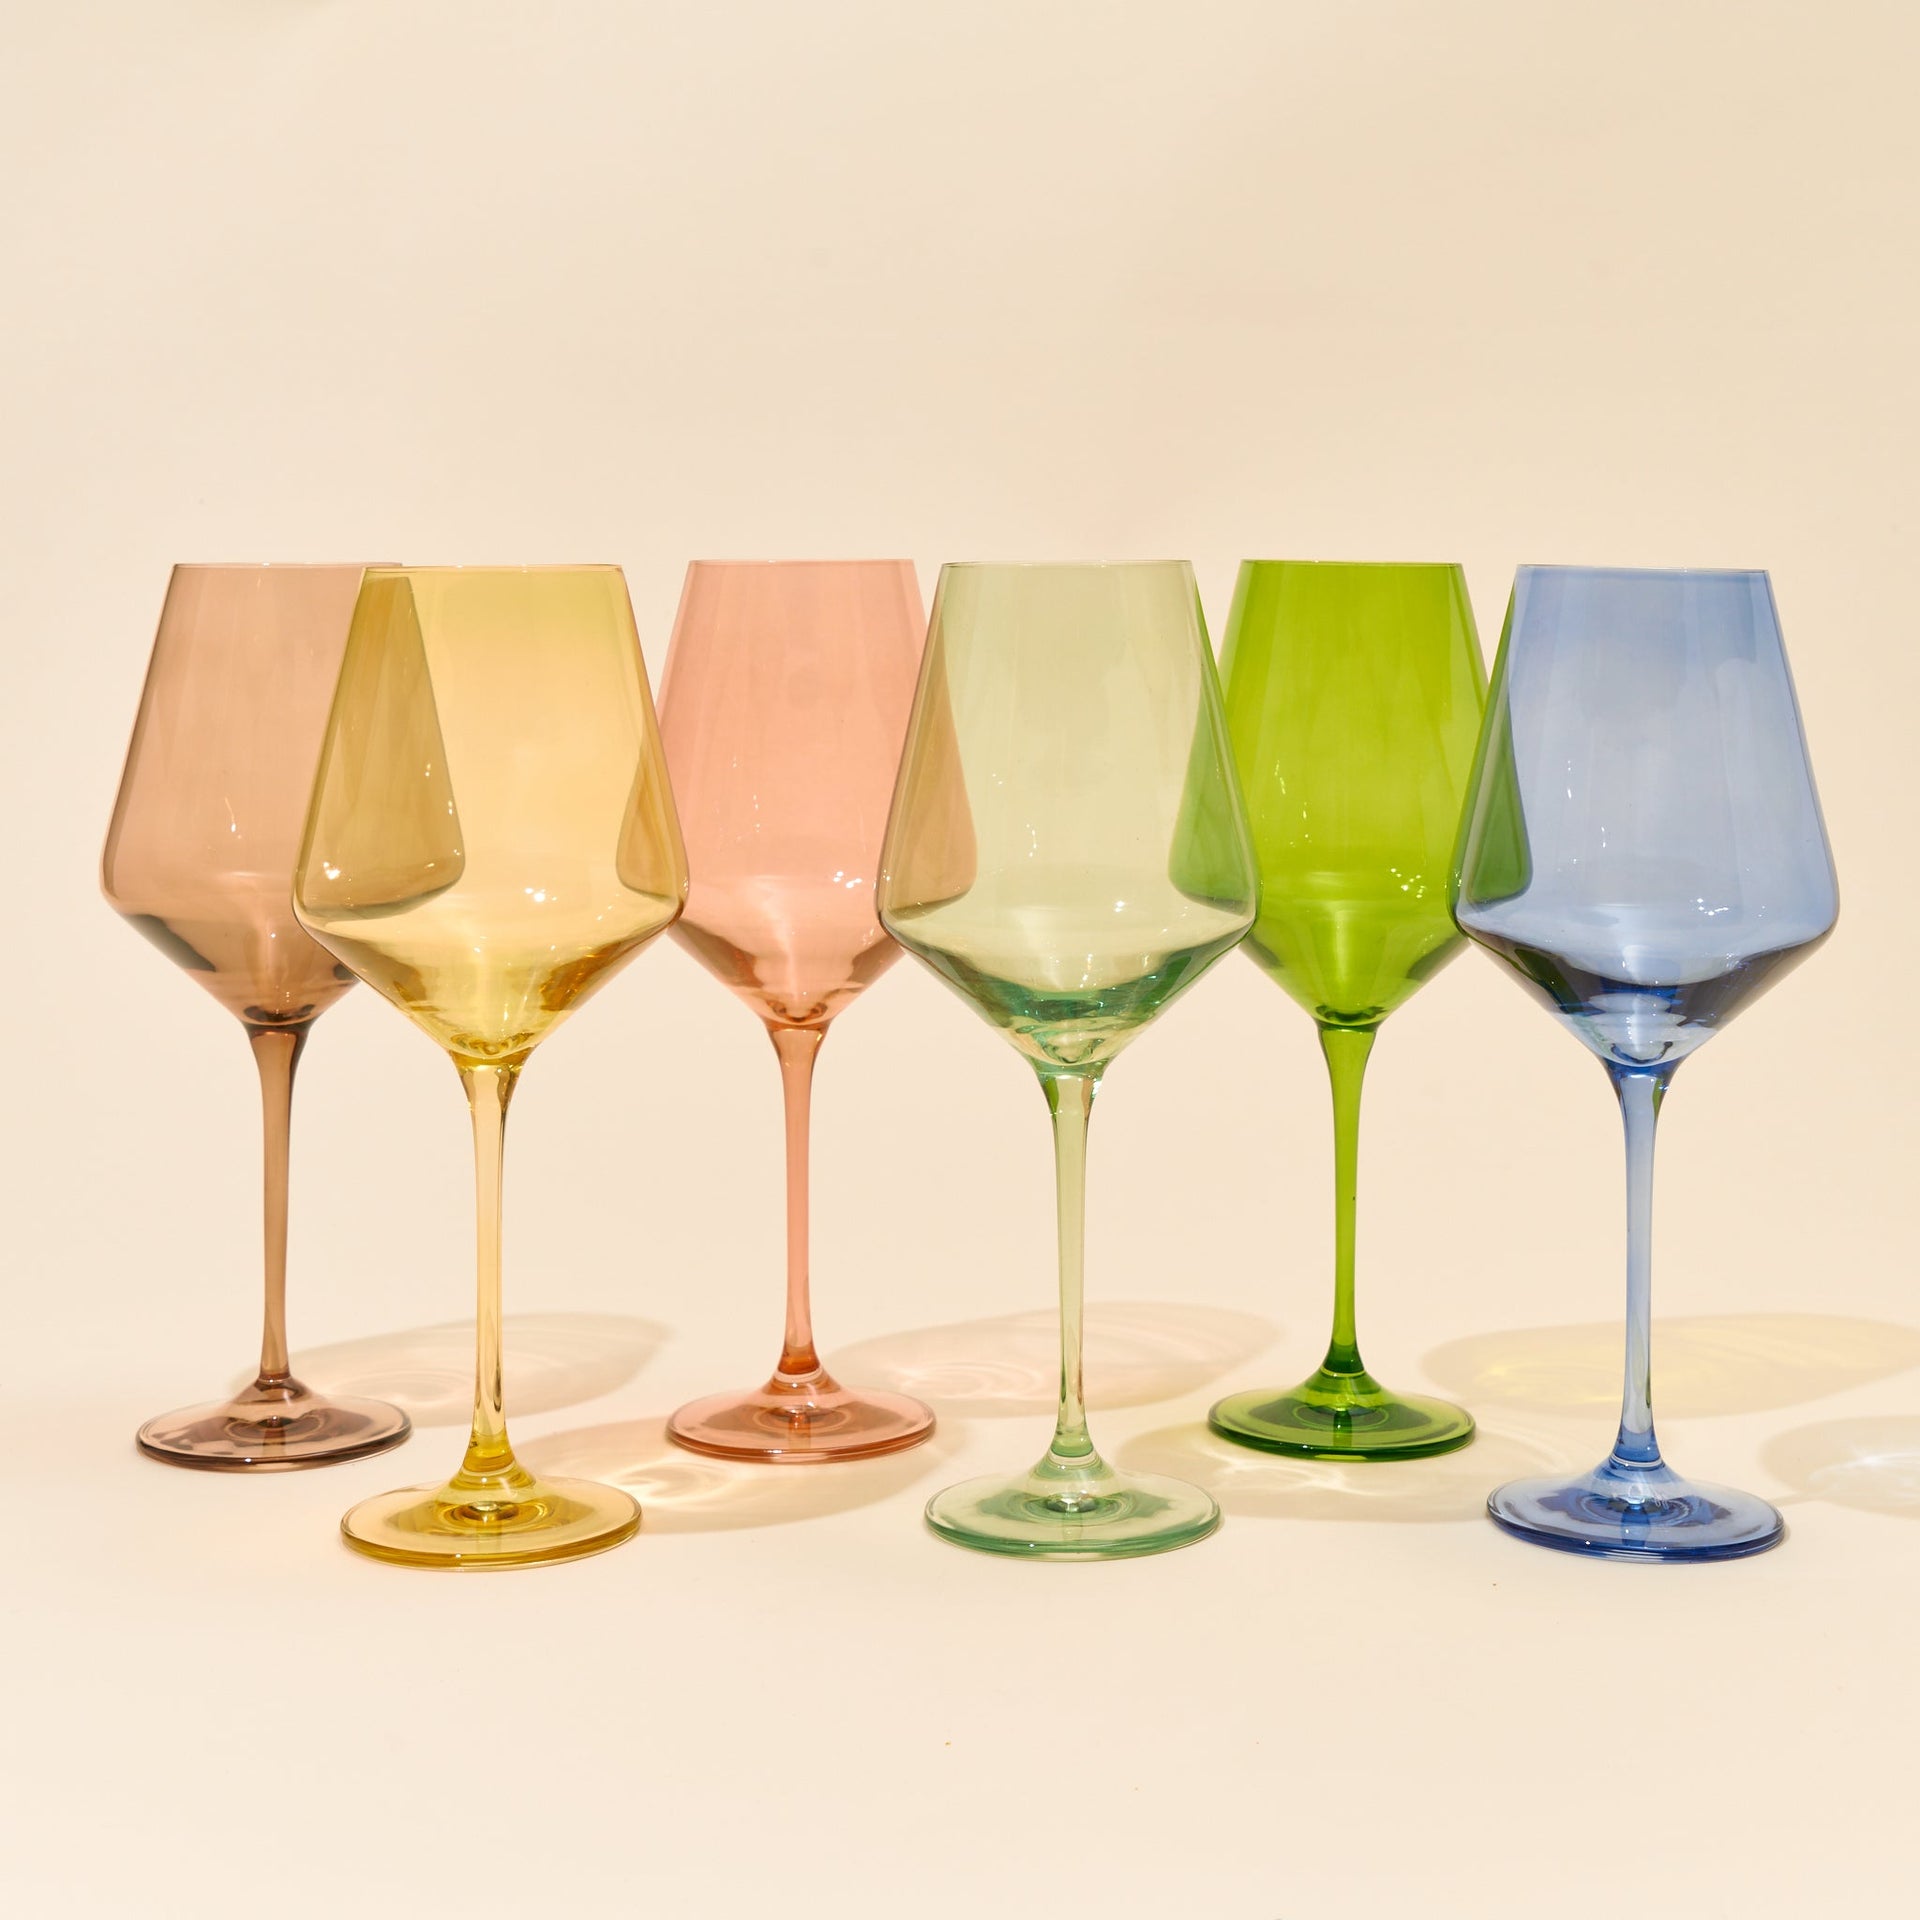 Estelle Colored Glass - Stemware Wine Glasses - Set of 6 Cobalt Blue